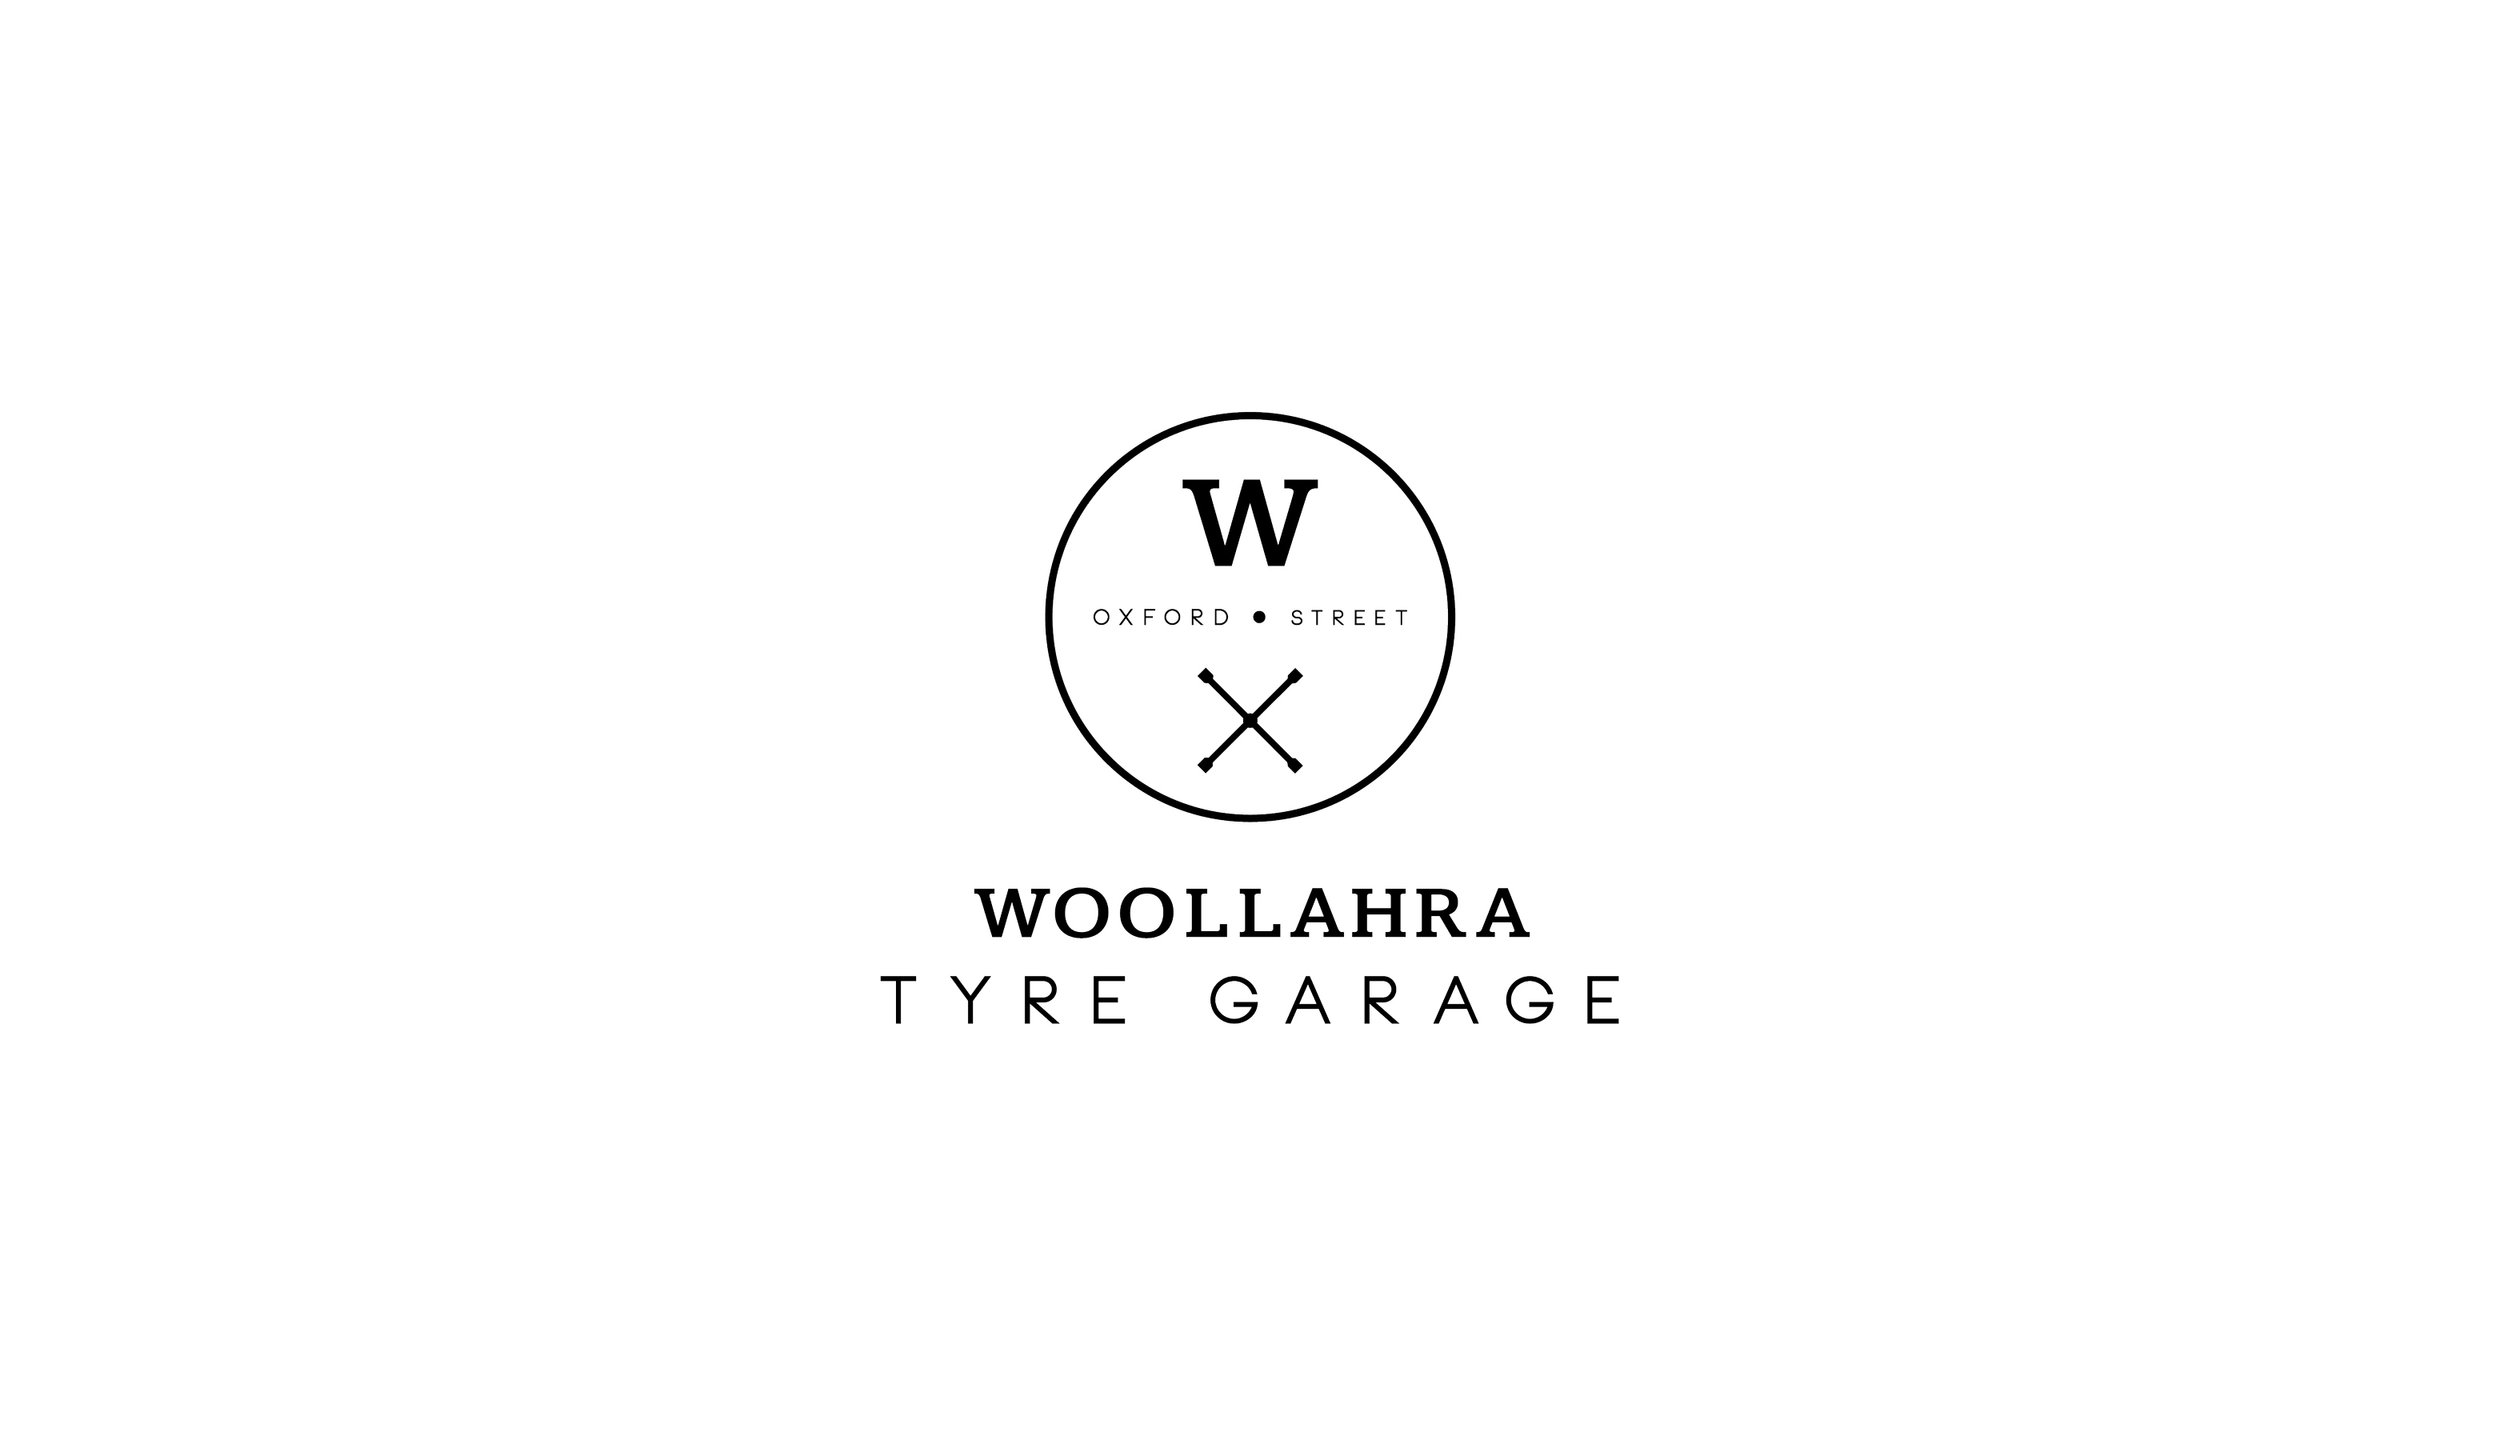 Woollahra Tyre Garage 2.jpg